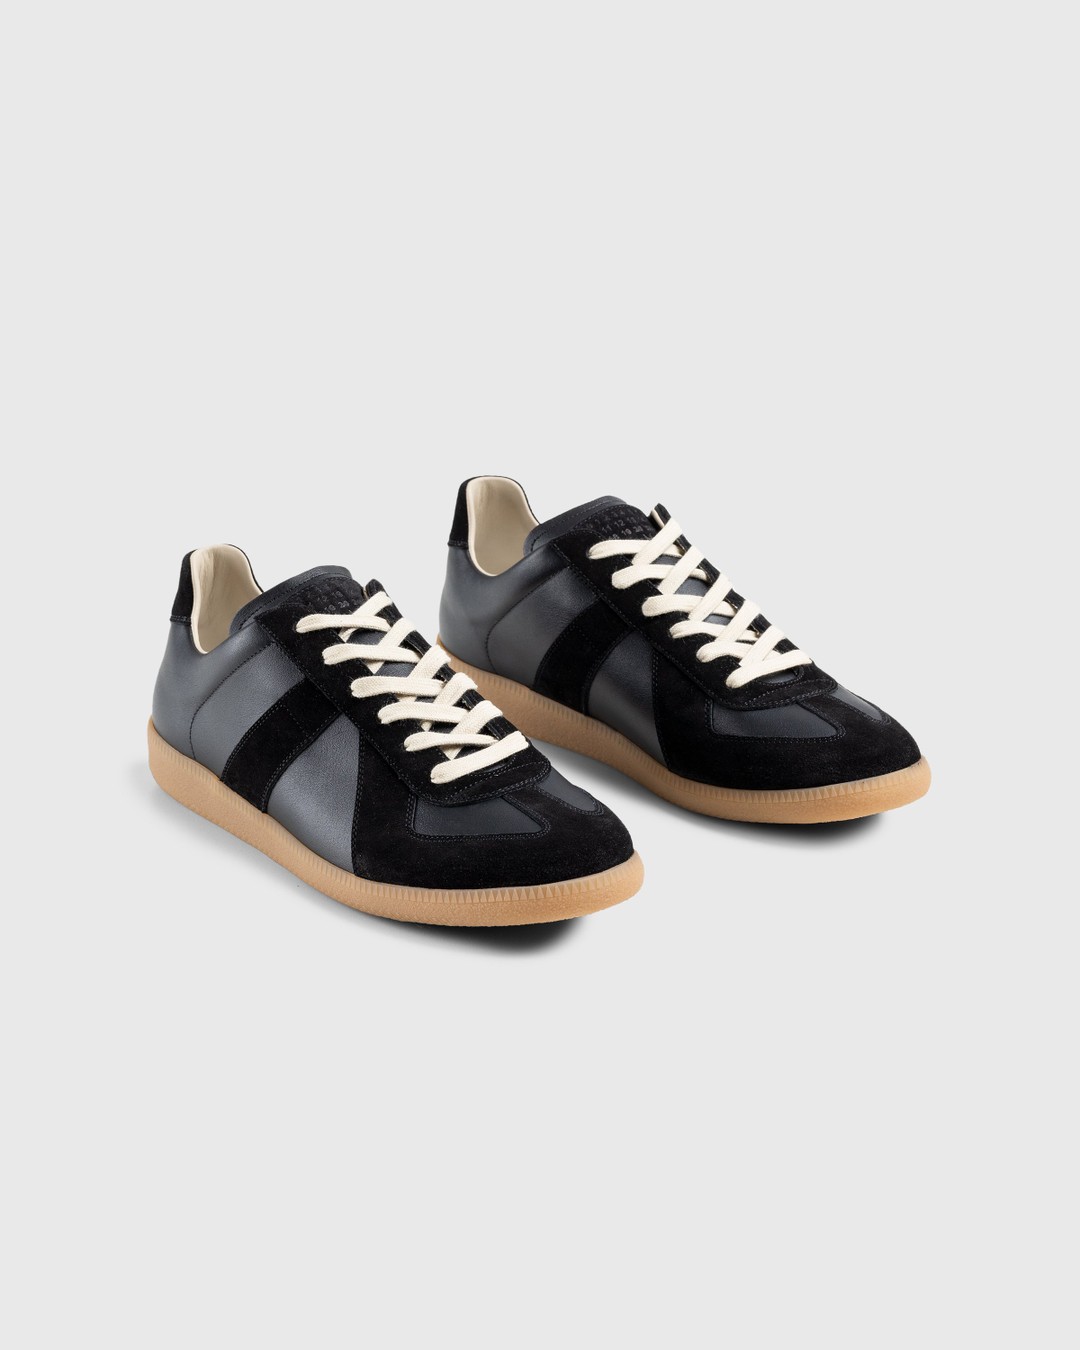 Maison Margiela – Leather Replica Sneakers Black - Sneakers - Black - Image 3